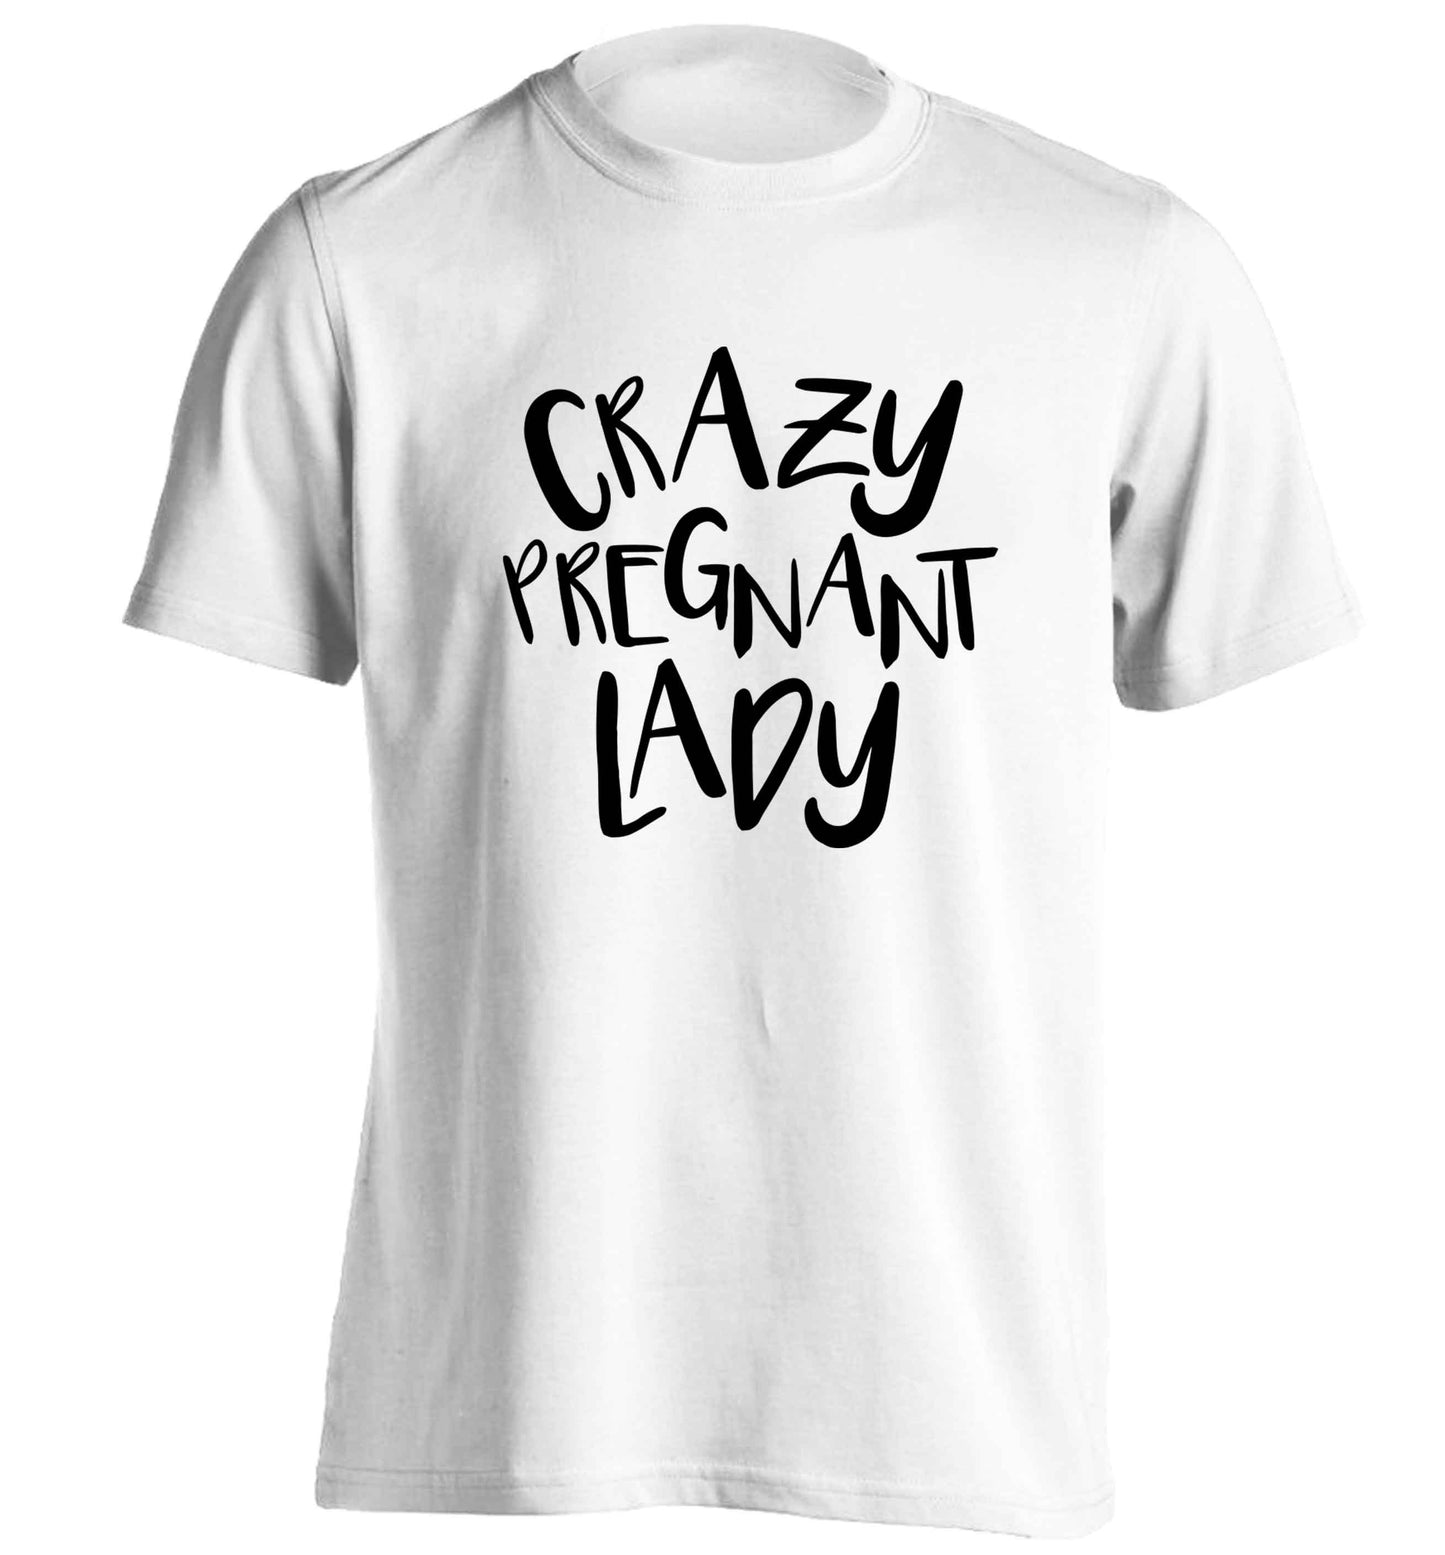 Crazy pregnant lady adults unisex white Tshirt 2XL